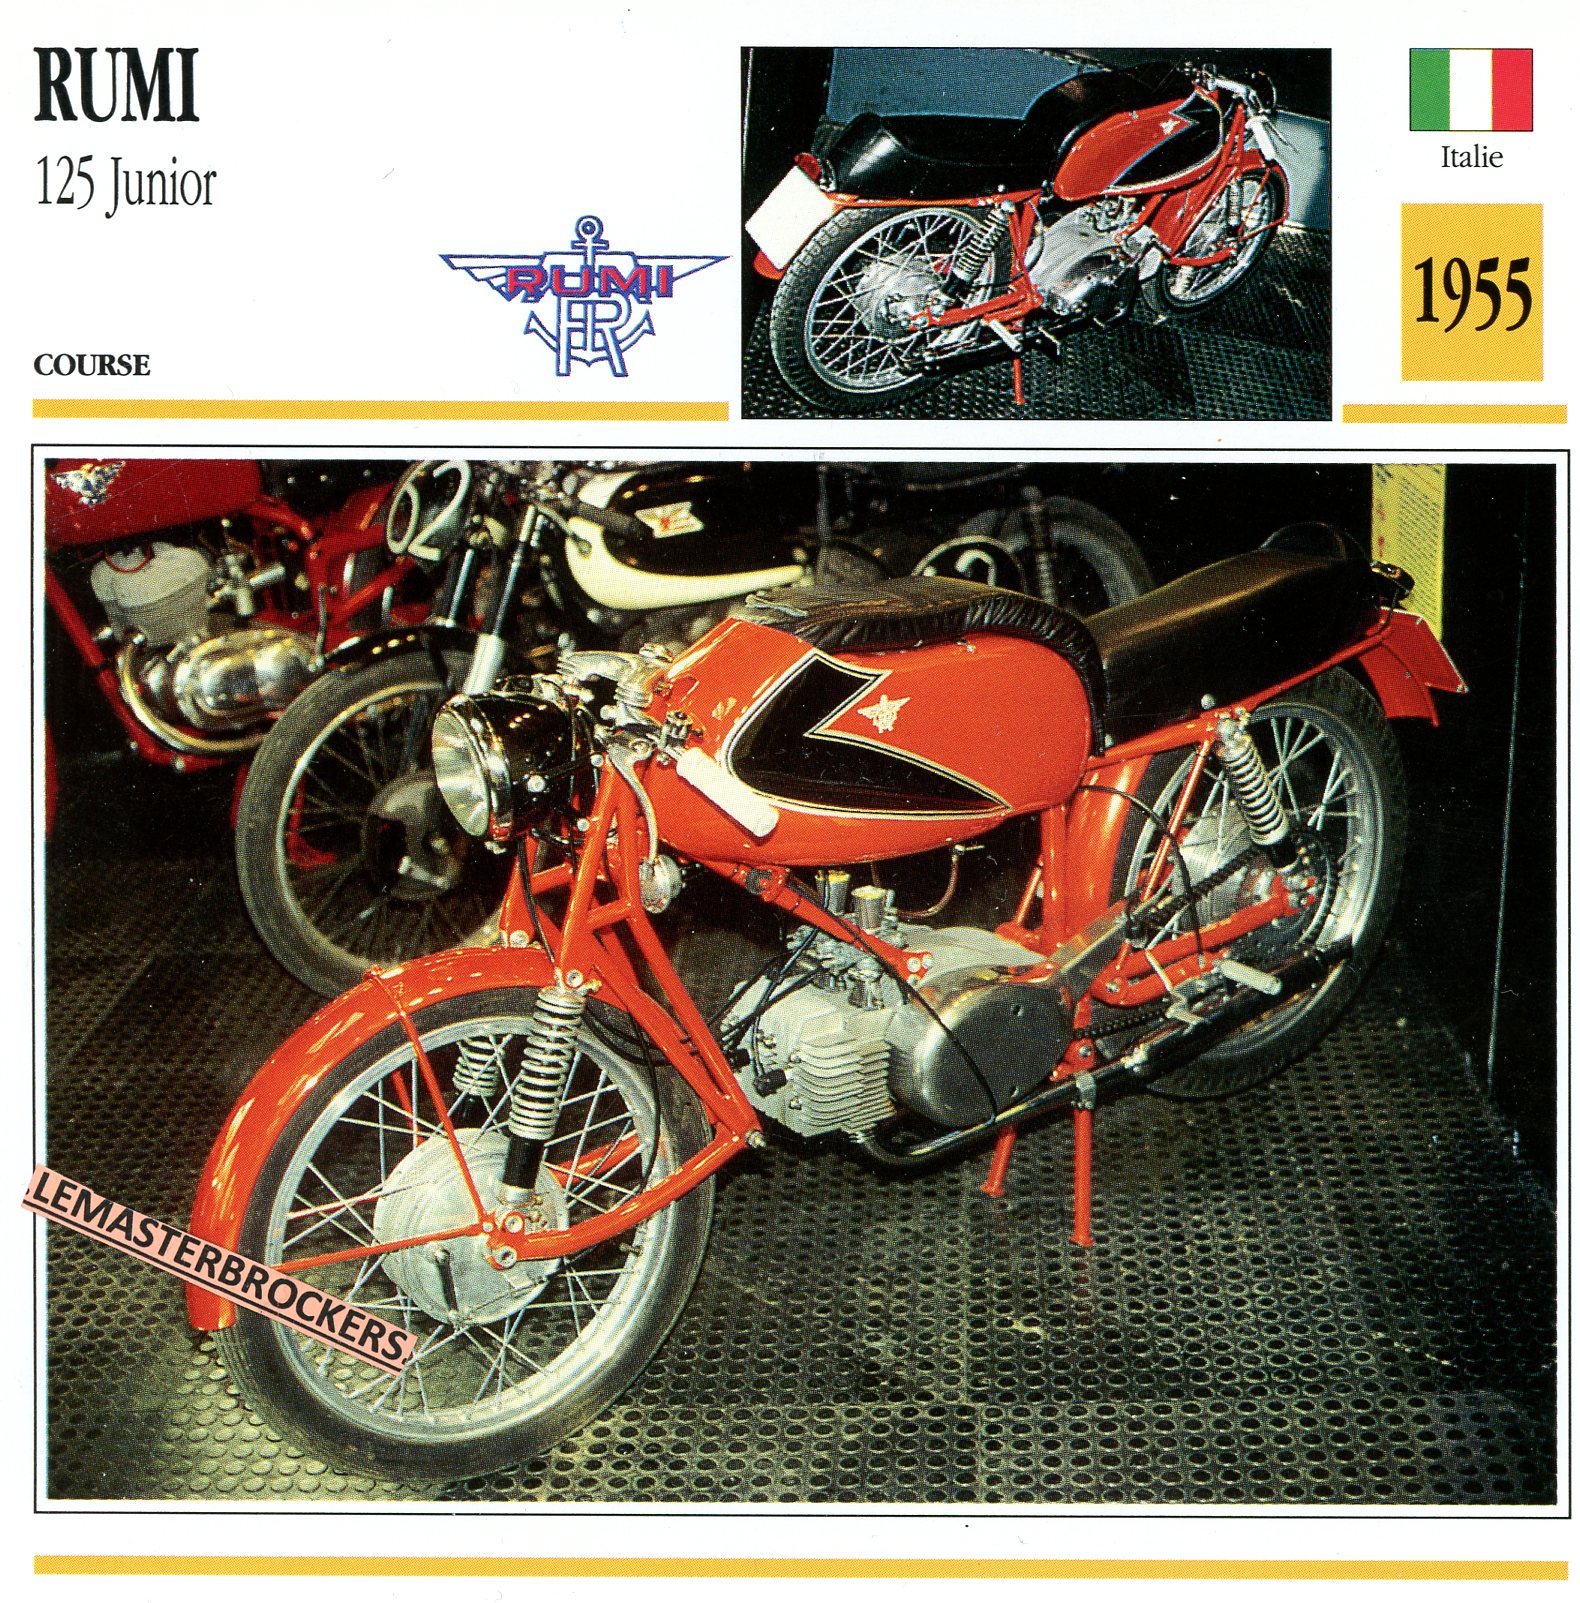 RUMI-125-JUNIOR-1955-FICHE-MOTO-LEMASTERBROCKERS-CARD-MOTORCYCLE